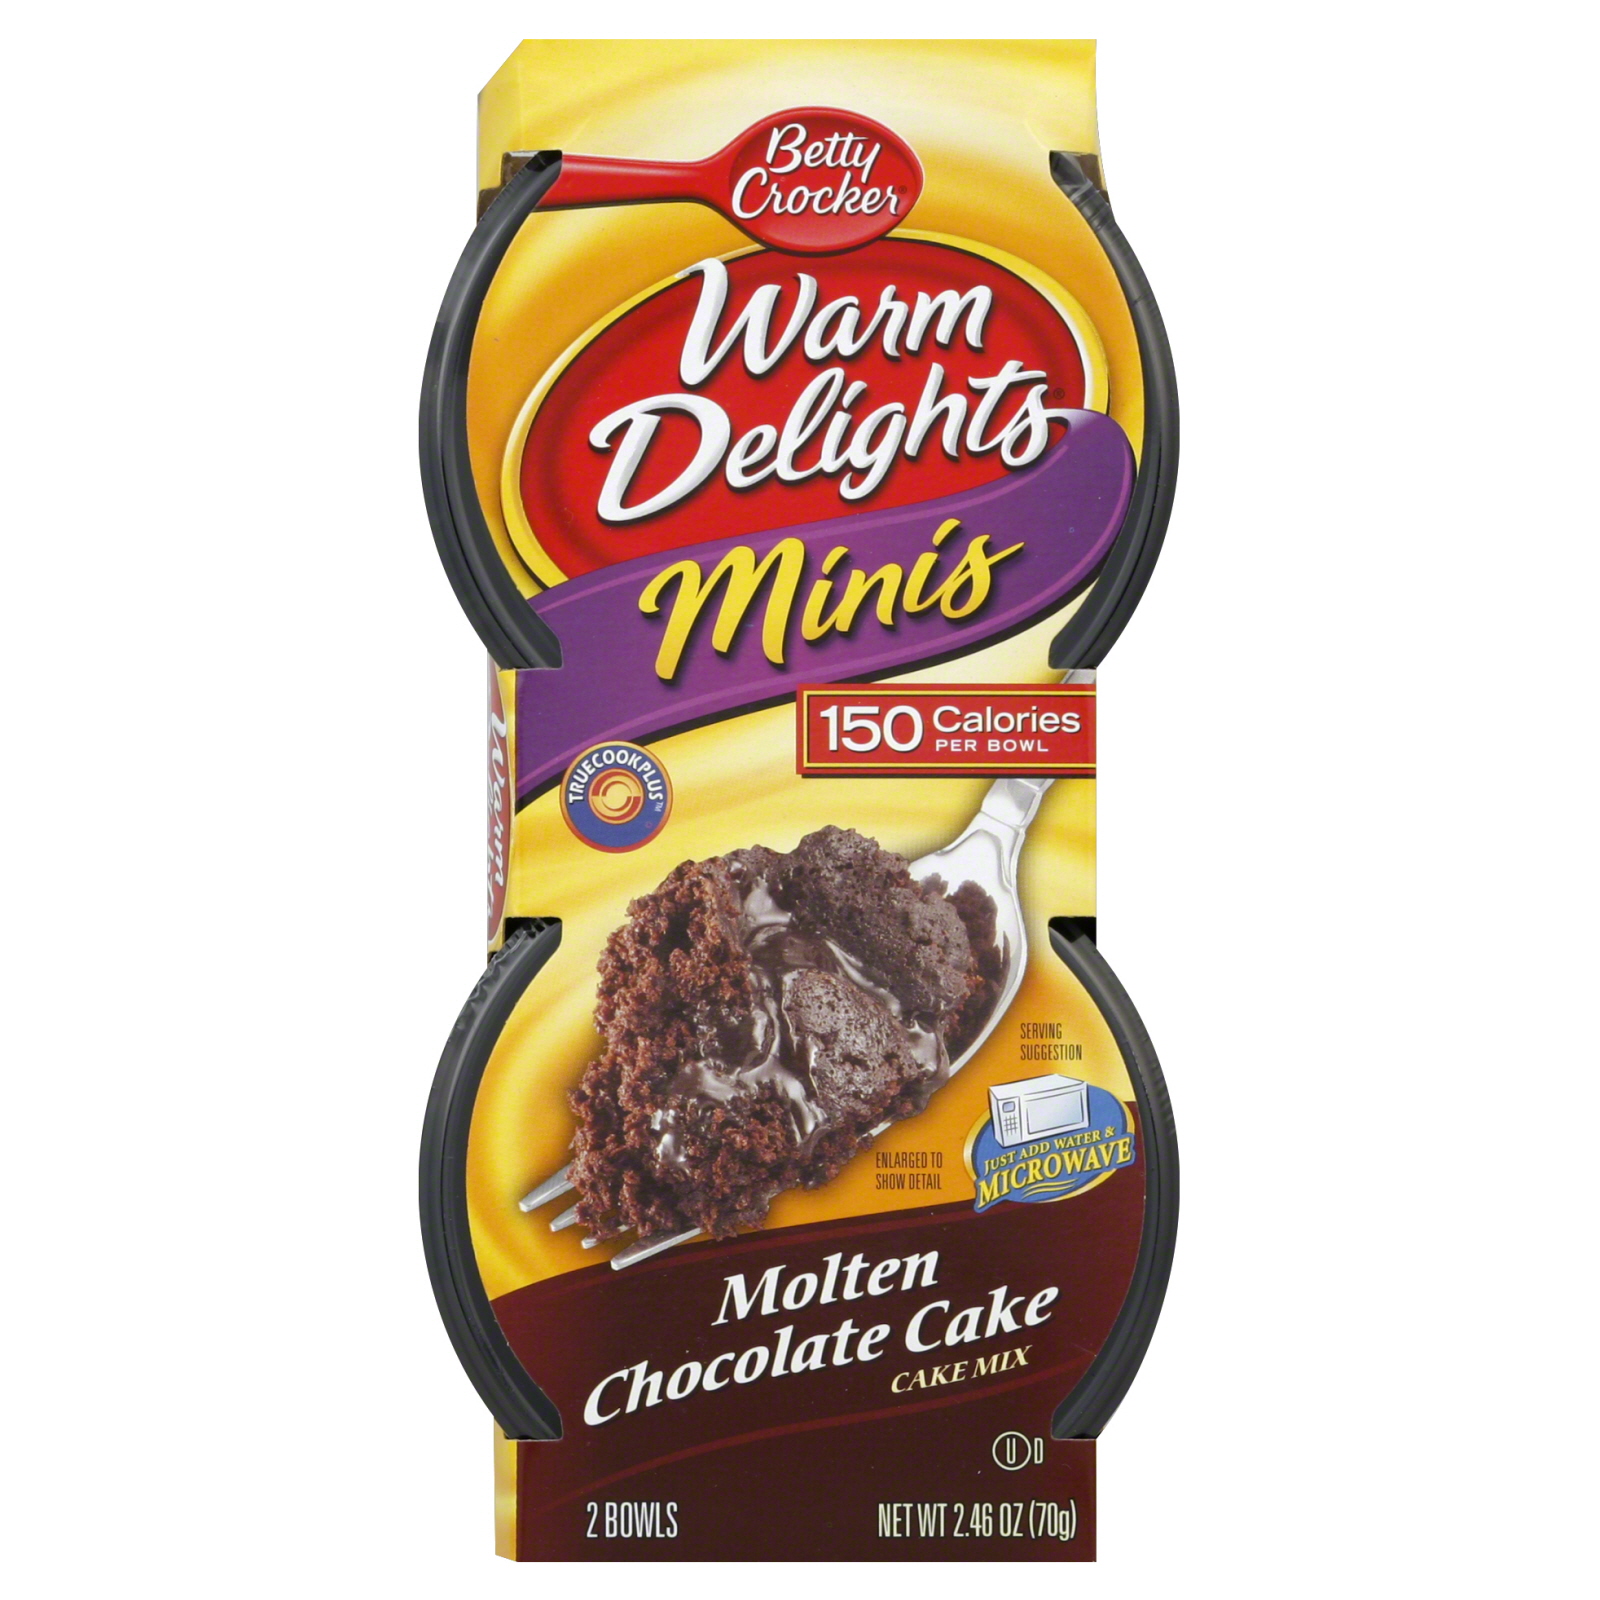 Betty Crocker Warm Delights Minis Cake Mix, Molten Chocolate Cake, 2 bowls [2.46 oz (70 g)]